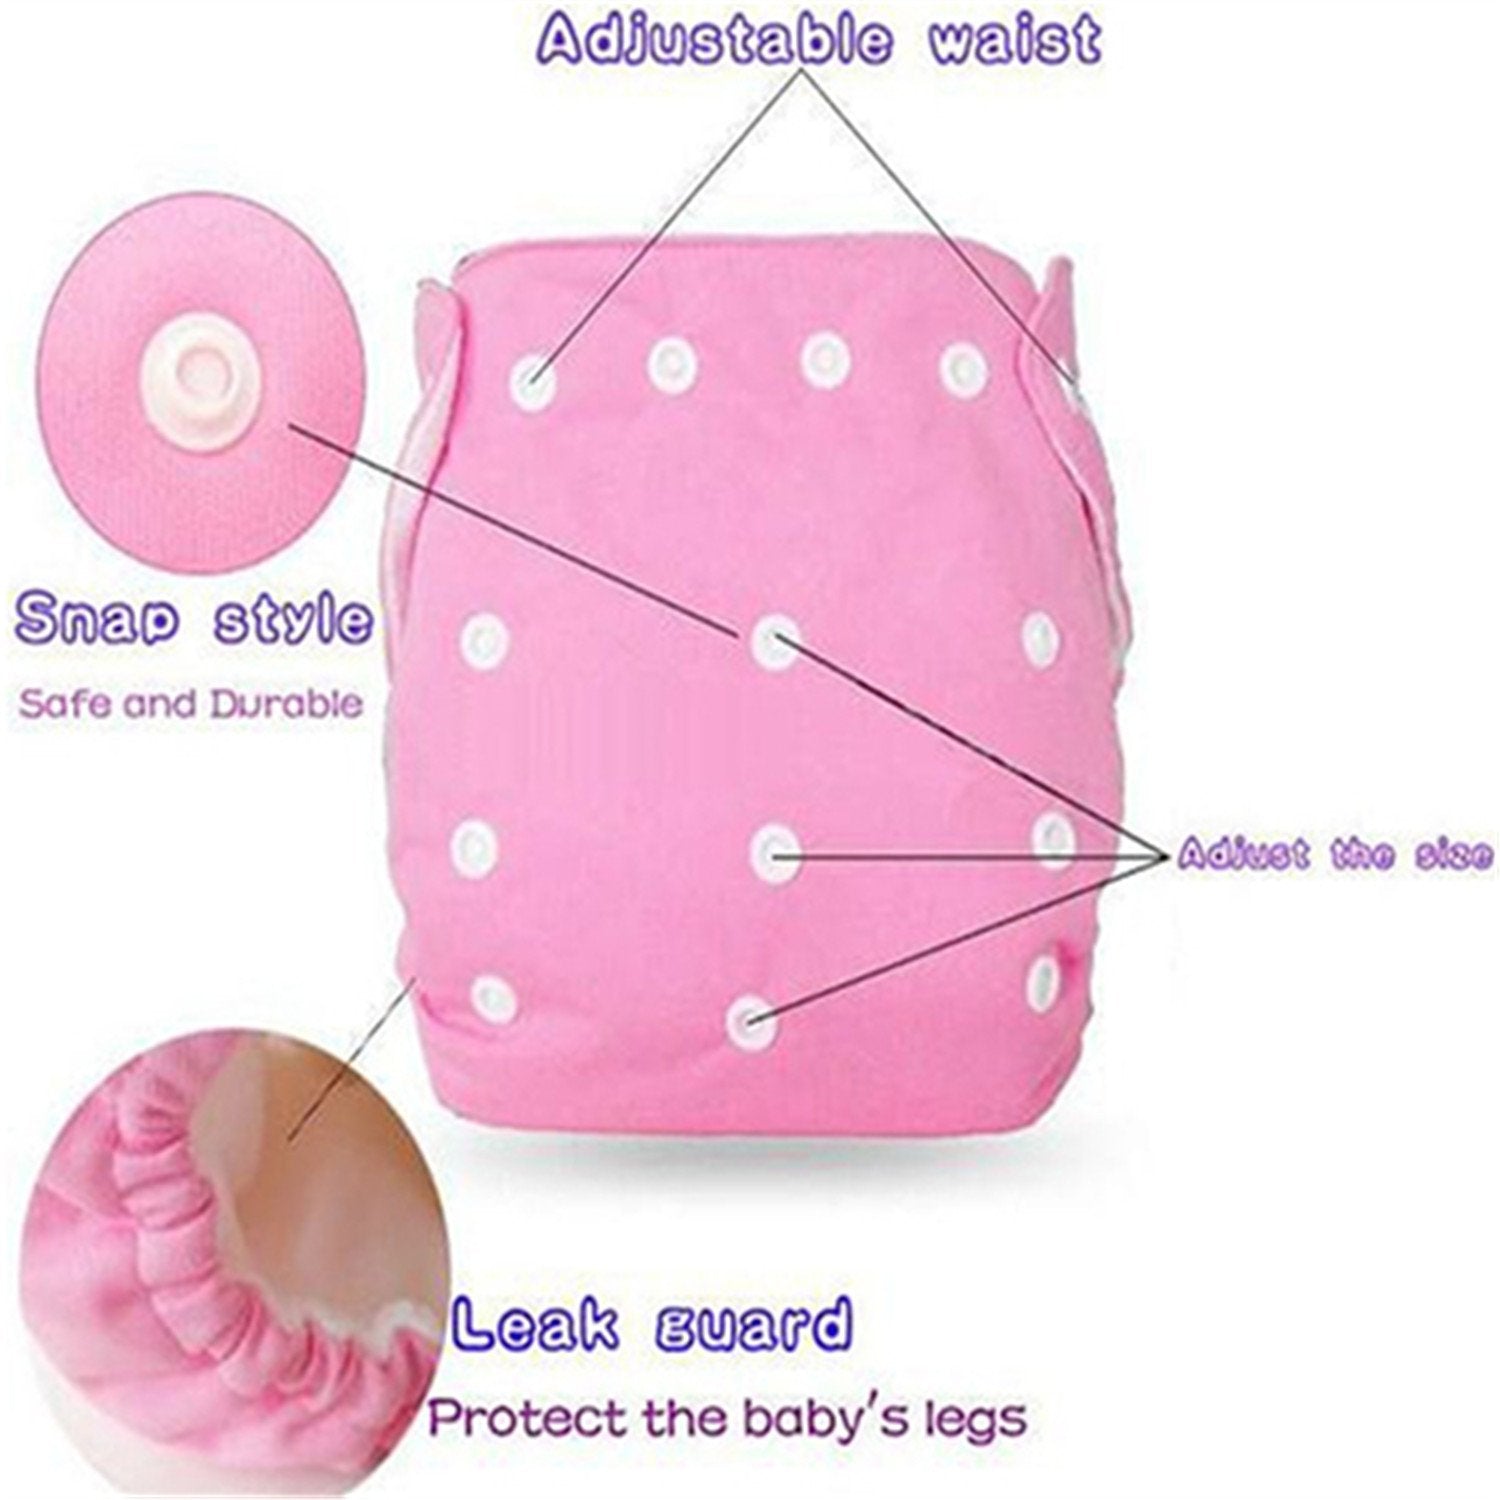 Reusable Baby Swim Diapers Washable Adjustable Swim Pant Covers 2pcs